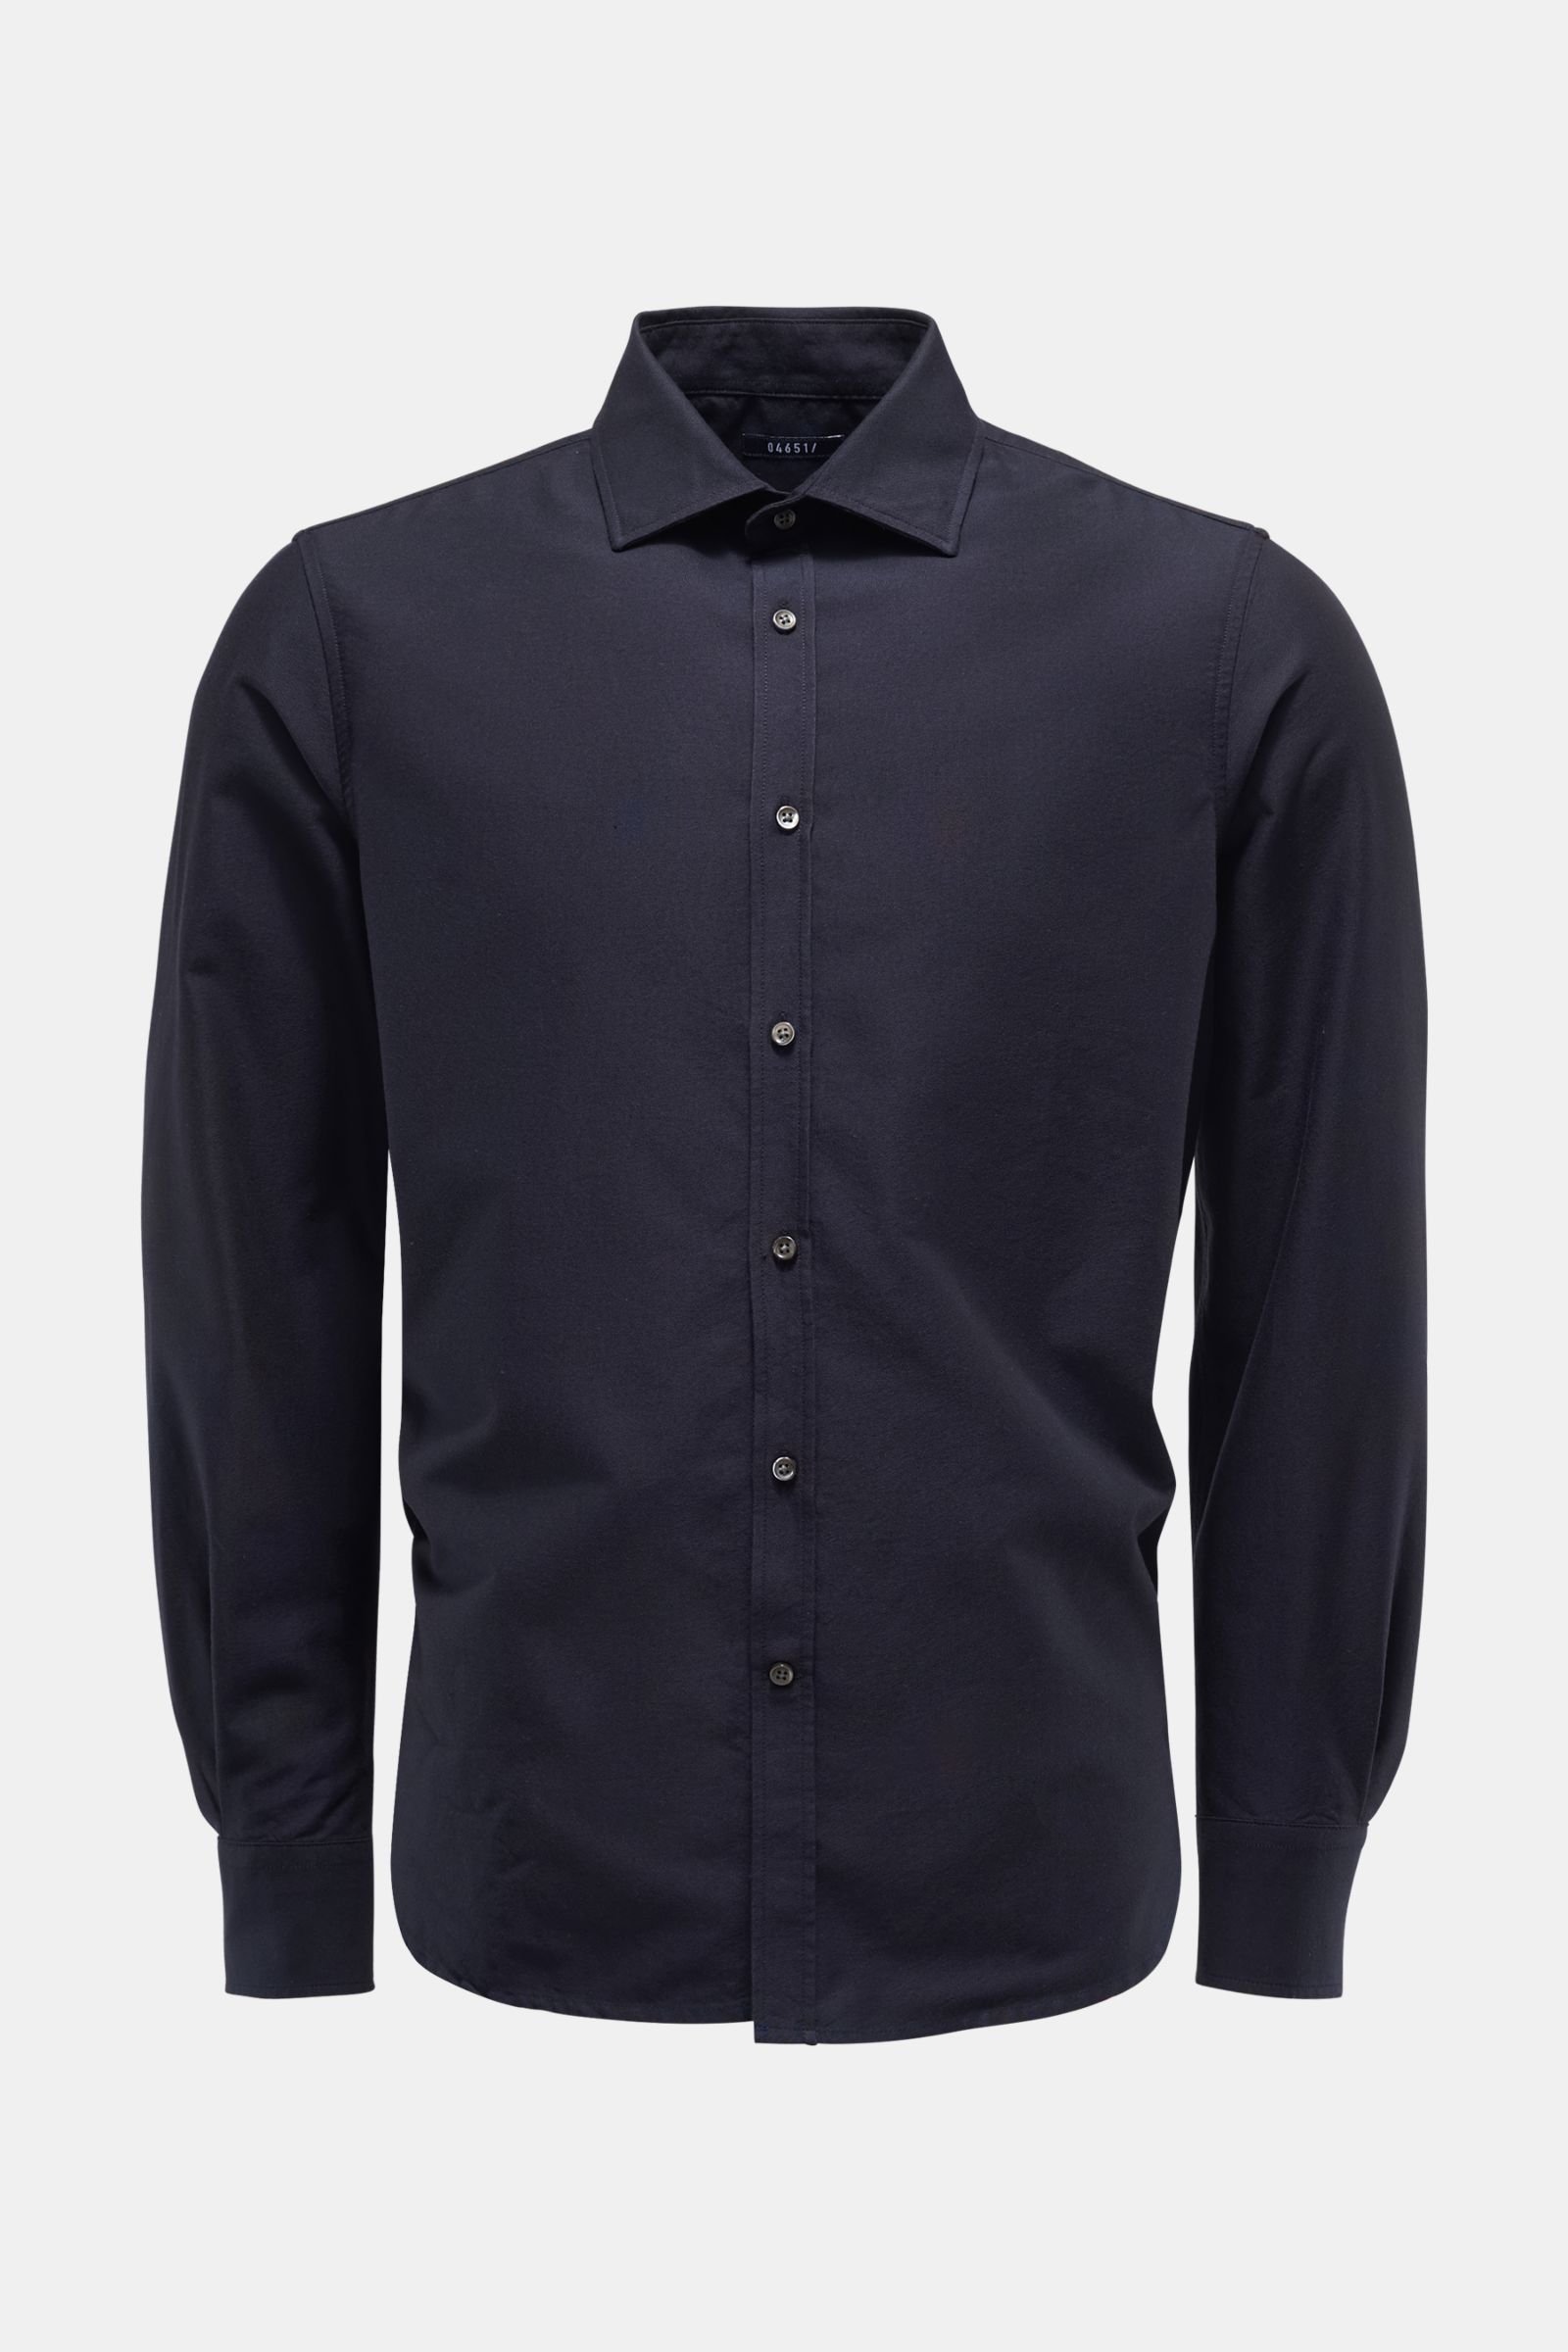 Oxford shirt 'Oxford Shirt' shark collar navy